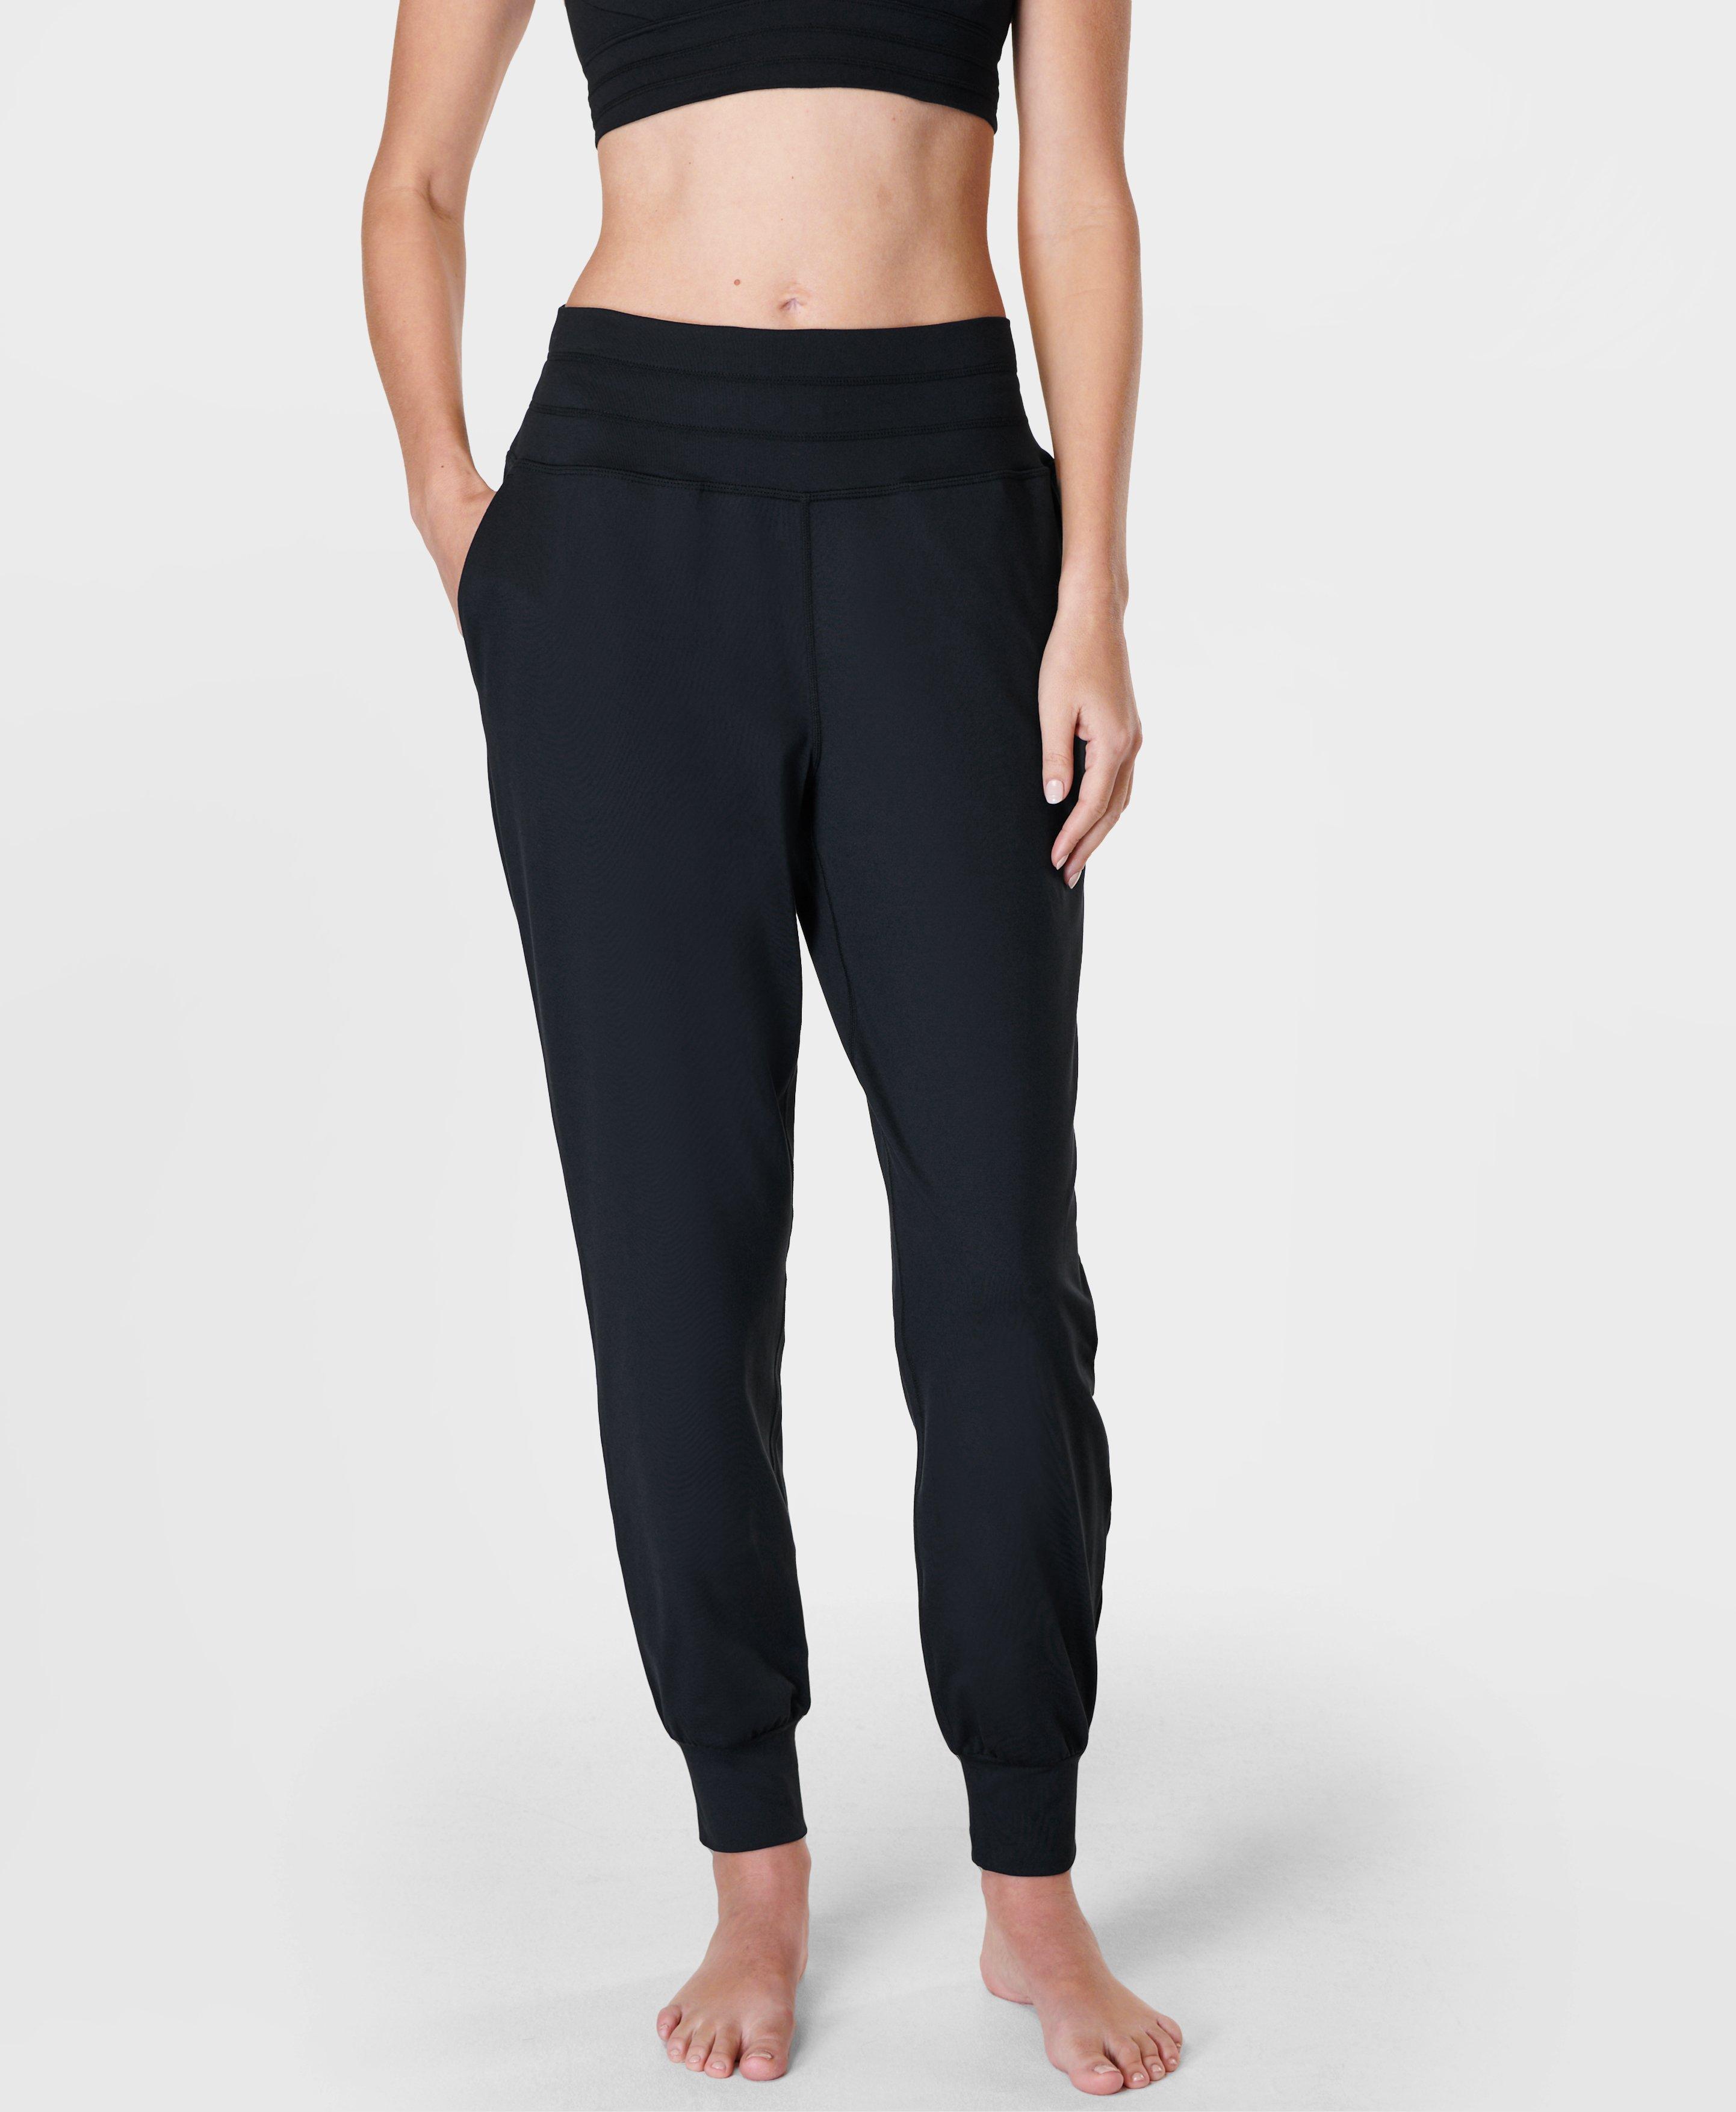 Womens Capri Active Pants Pockets Drawstring Sweatpants Loose Lounge Yoga  Workout Running Pants, Free Shipping, Free Returns